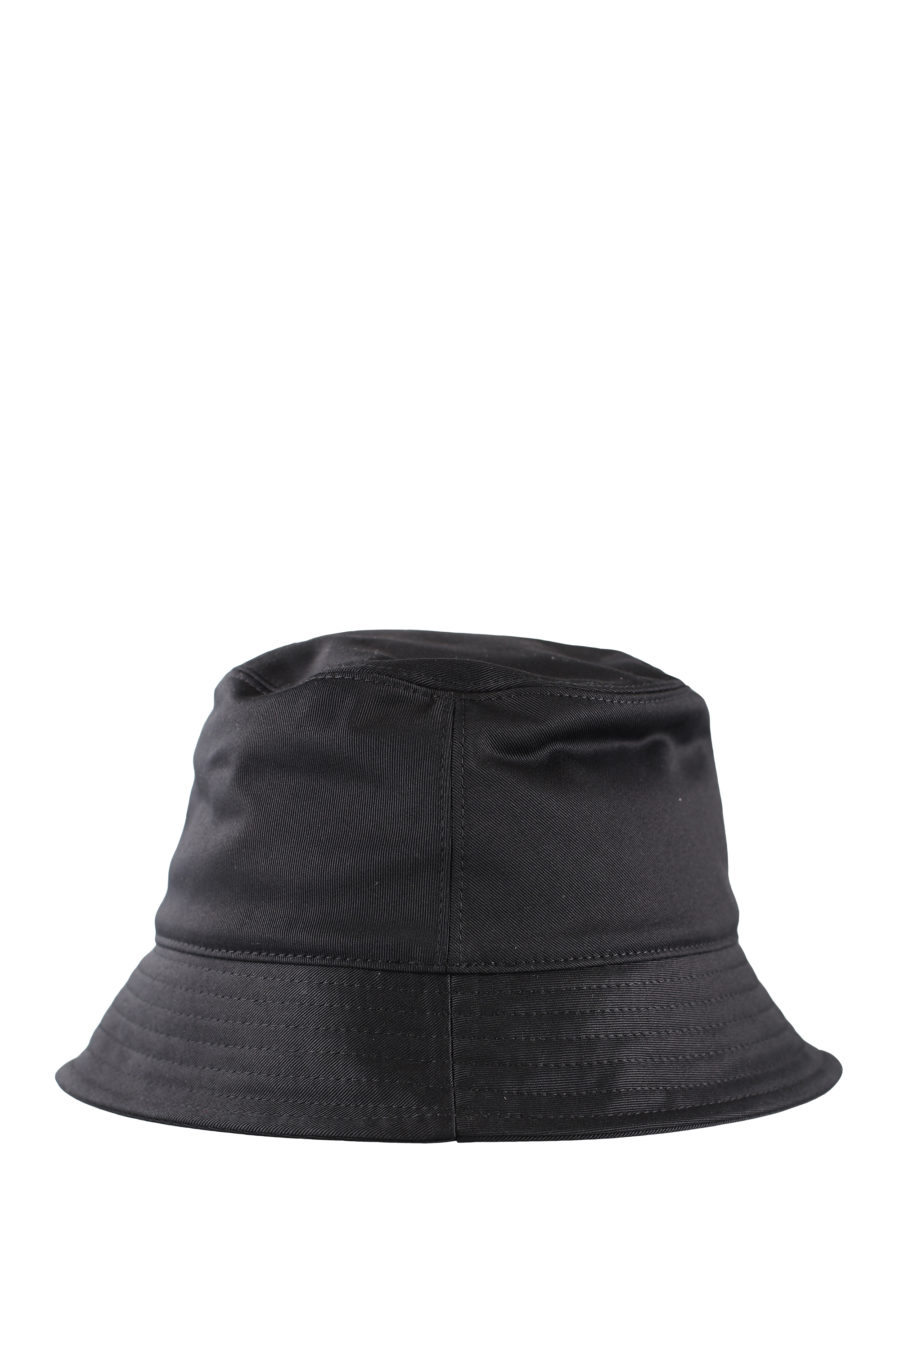 Black fisherman's hat with "icon" logo - IMG 0071